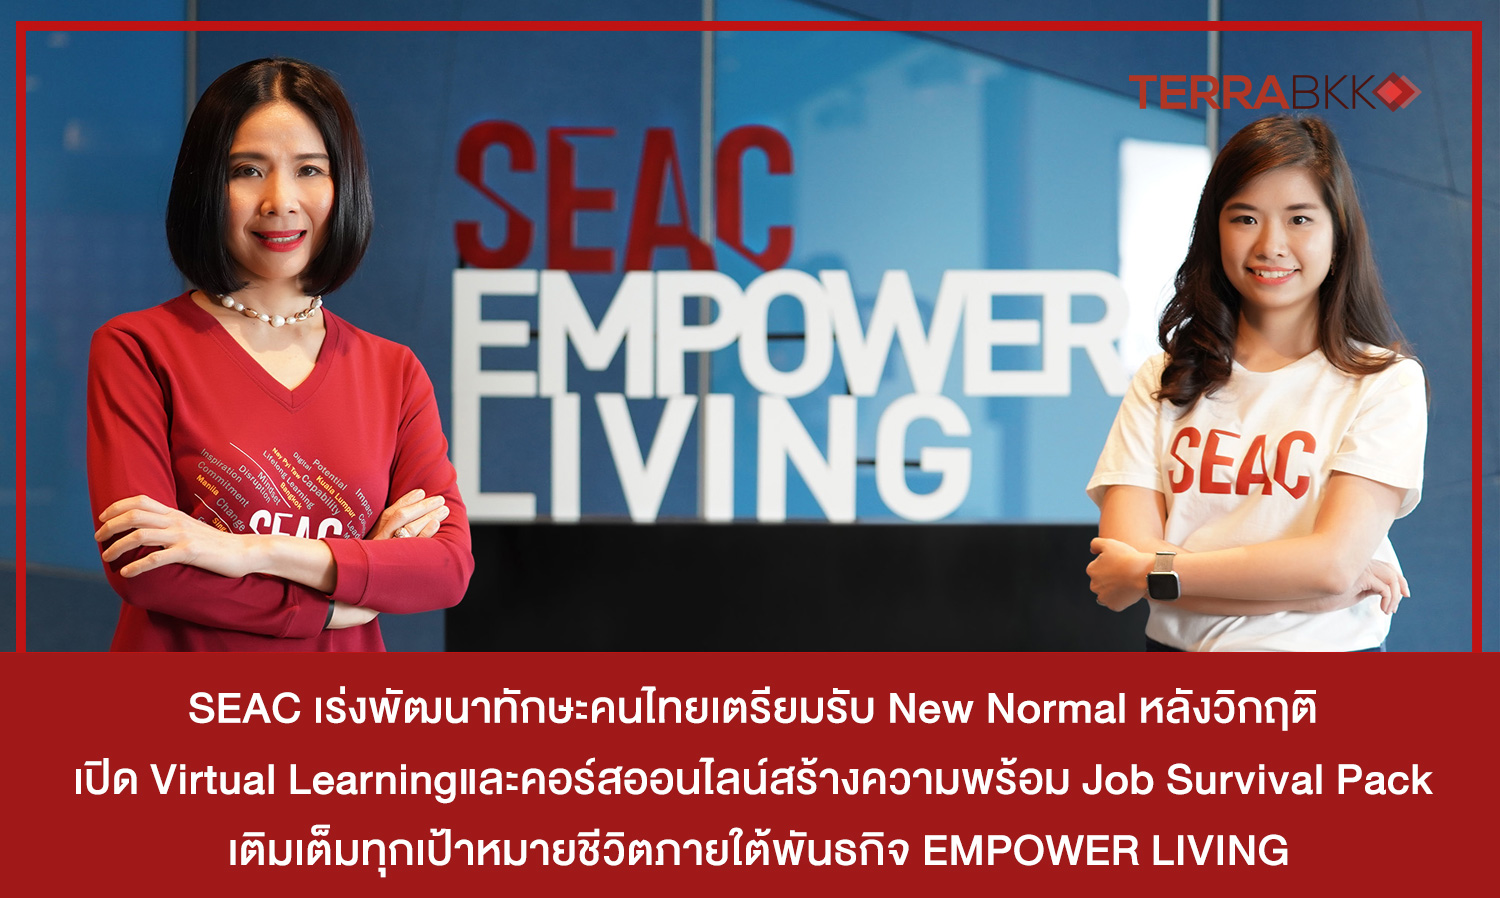 SEAC เร่งพัฒนาทักษะคนไทยเตรียมรับ New Normal หลังวิกฤติ  เปิด Virtual Learningและคอร์สออนไลน์สร้างความพร้อม Job Survival Pack  เติมเต็มทุกเป้าหมายชีวิตภายใต้พันธกิจ EMPOWER LIVING